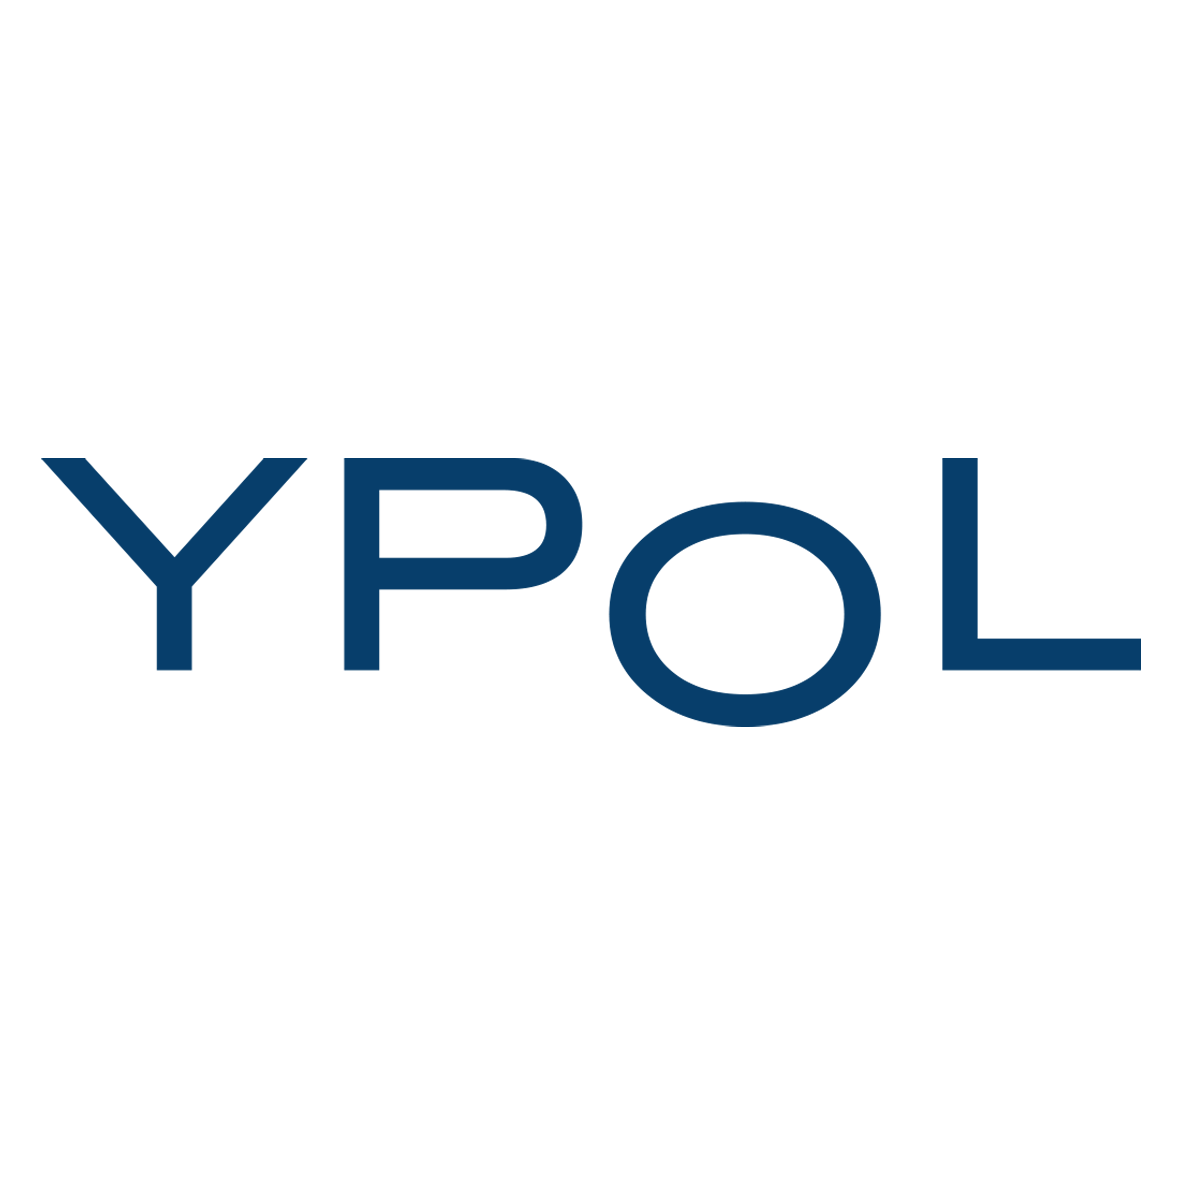 YPOL Lawyers Logo